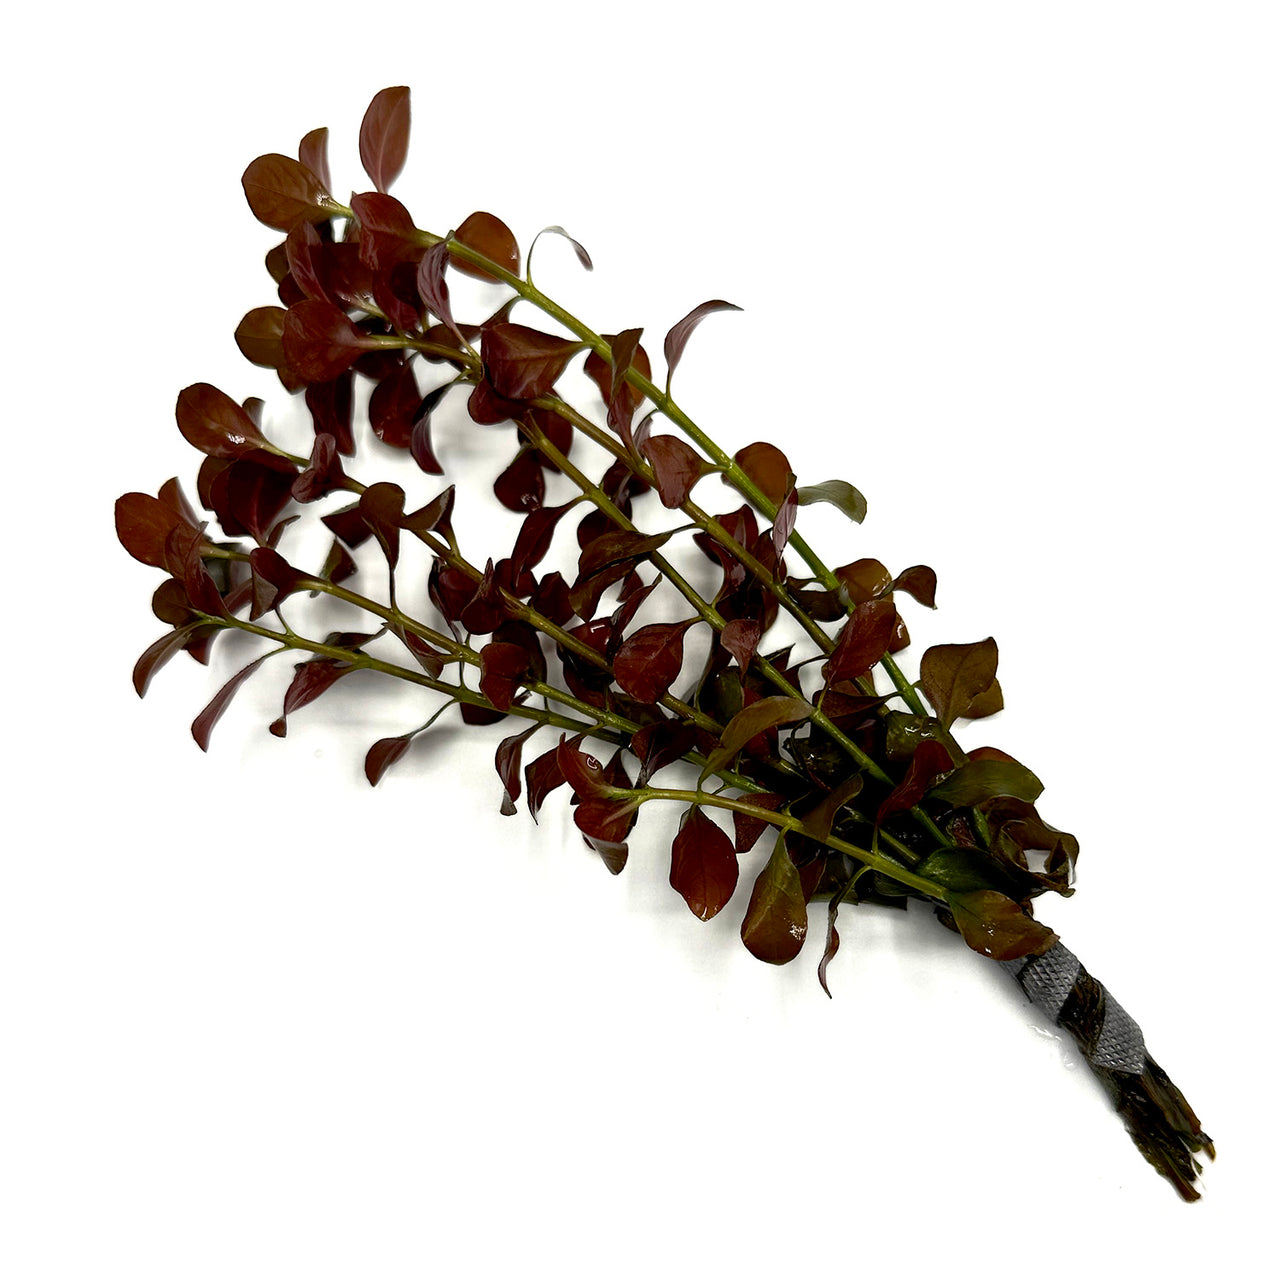 Narrow Leaf Ludwigia (Ludwigia palustris)